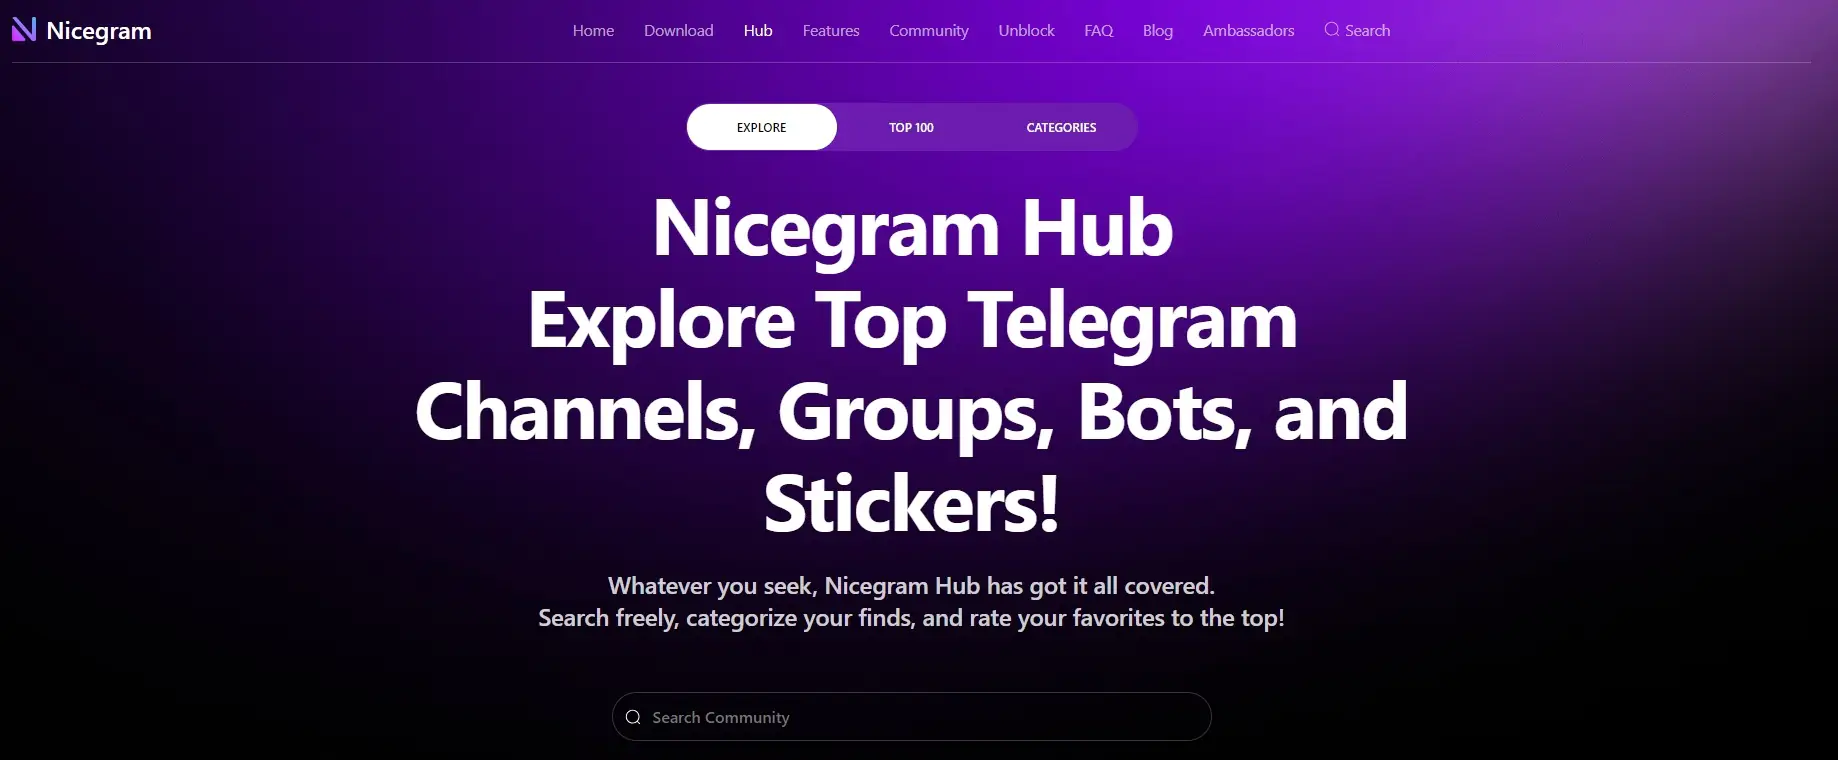 Nicegram Hub’s main page